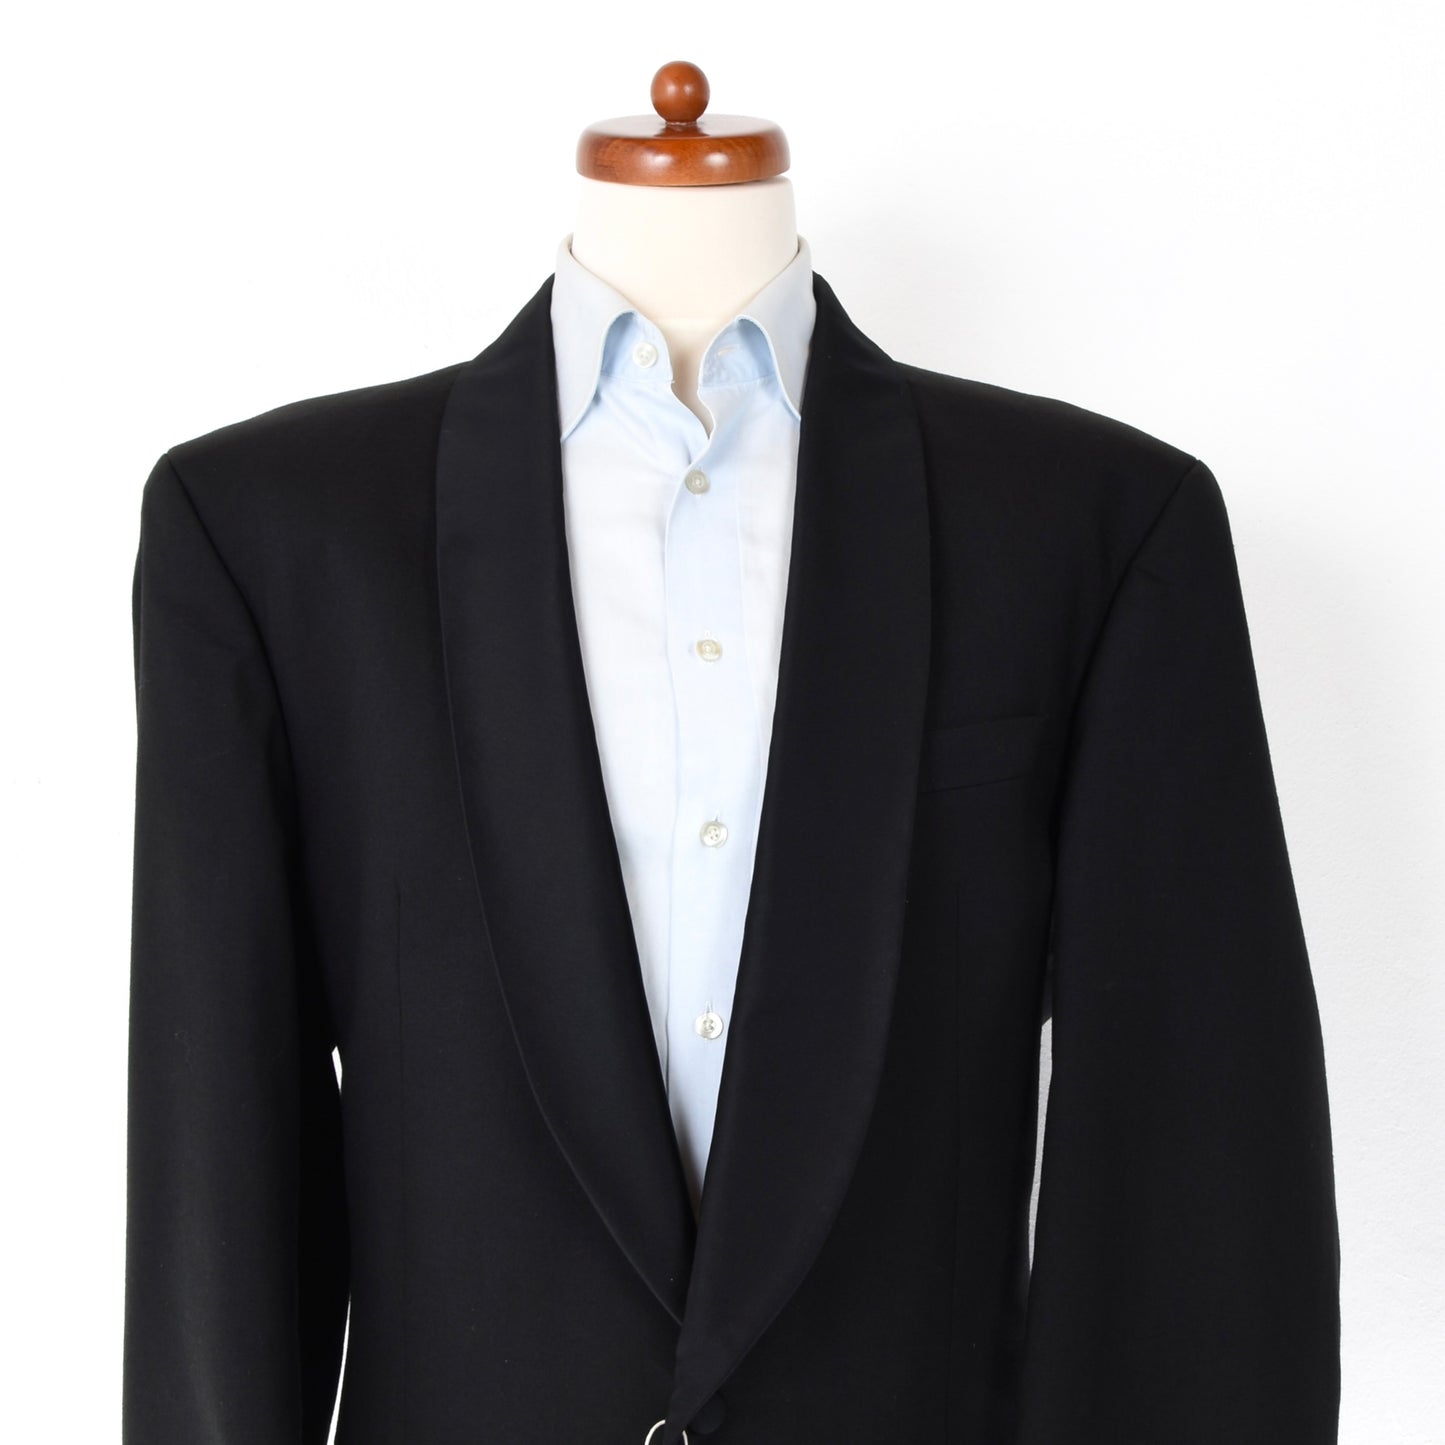 Topas Design 100% Wool Shawl Collared Tuxedo Size 106 - Black